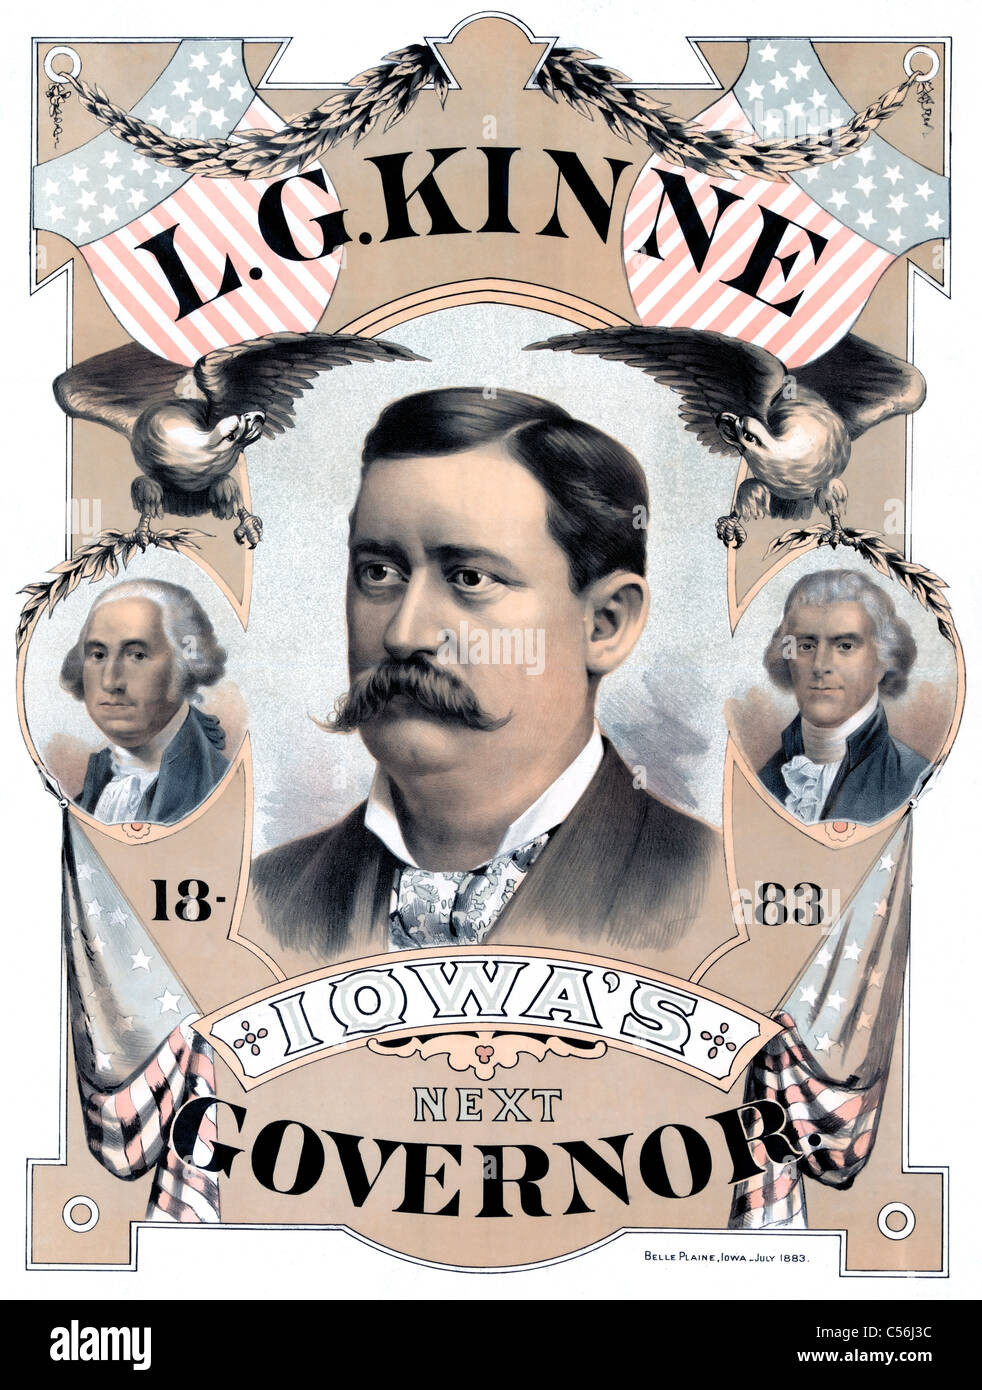 L.G. Kinne Iowa's next governor, Campaign poster 1883 Stock Photo